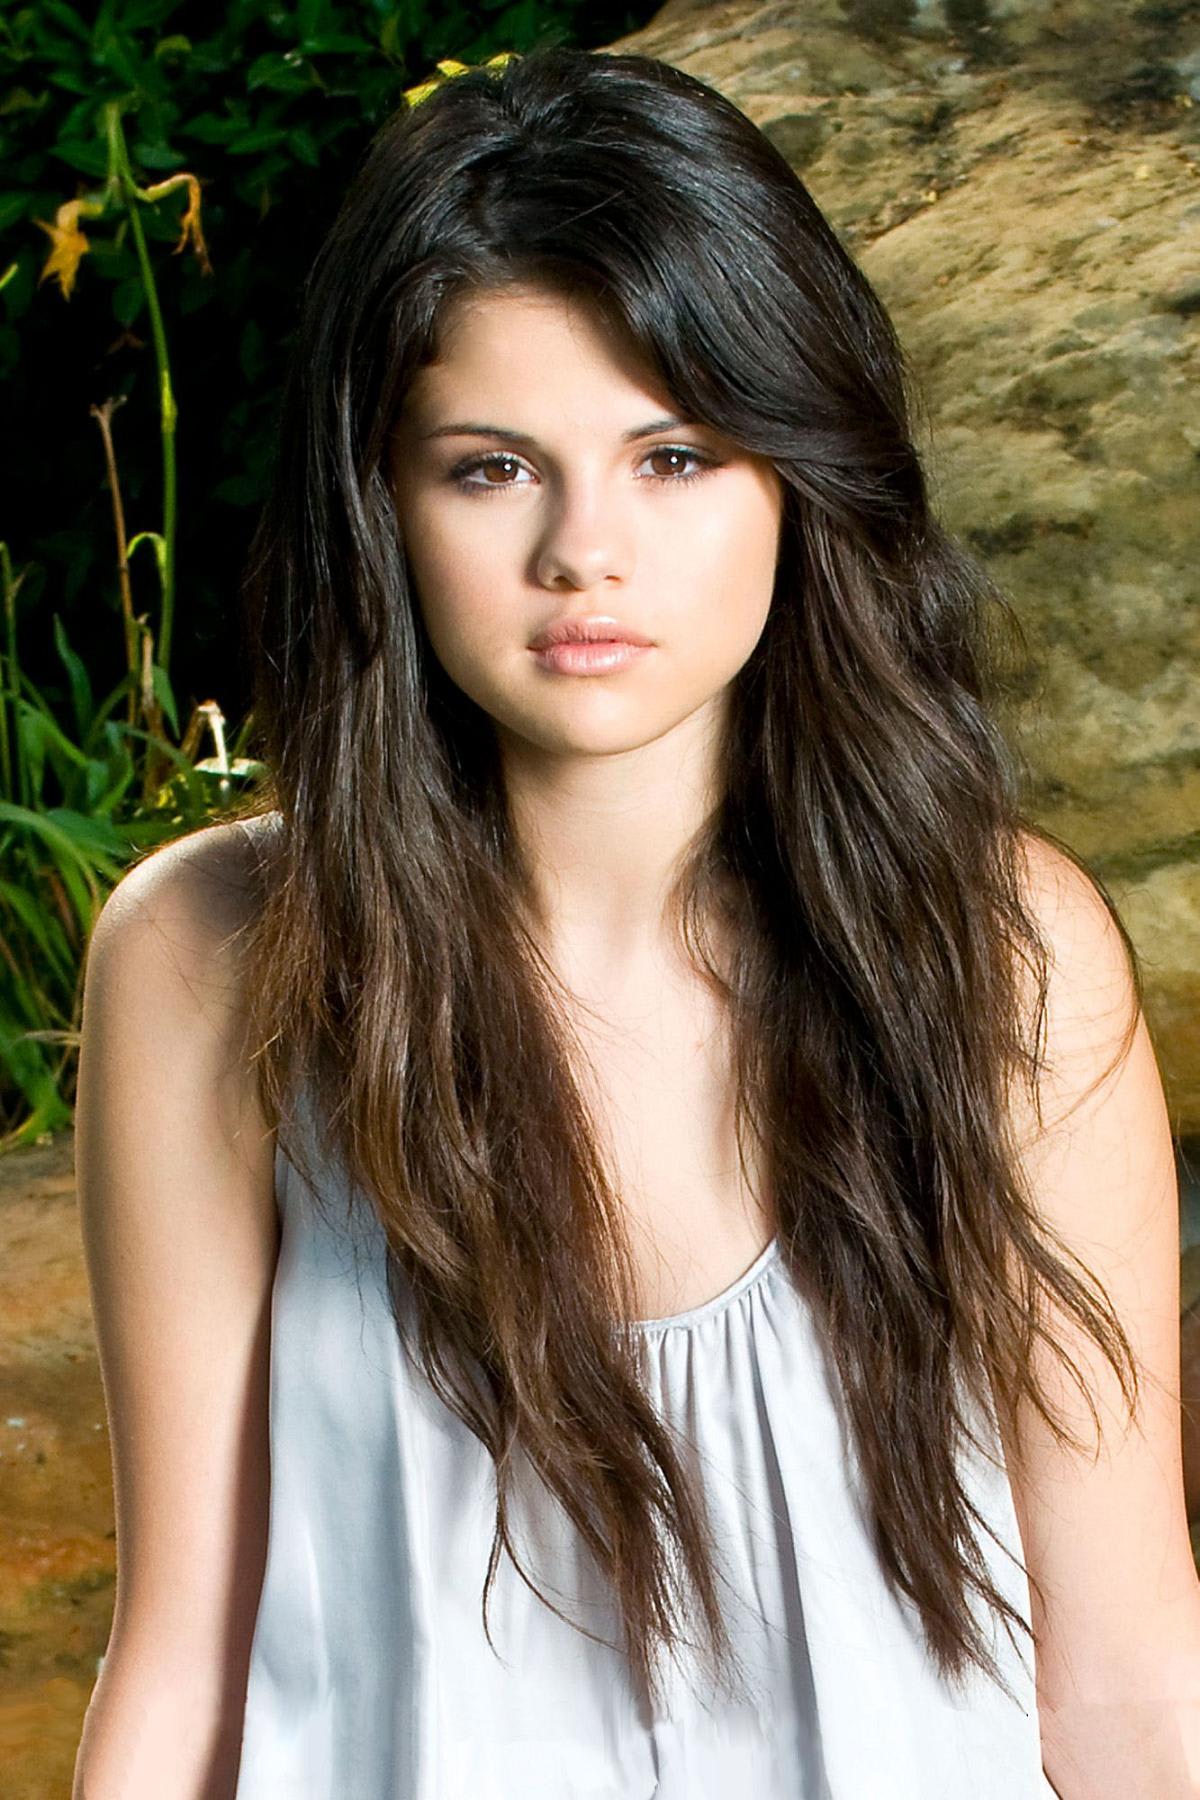 Selena Gomez Dkny Beach House Photo Shoot 1 ☆favorite Celebrity Pictures☆